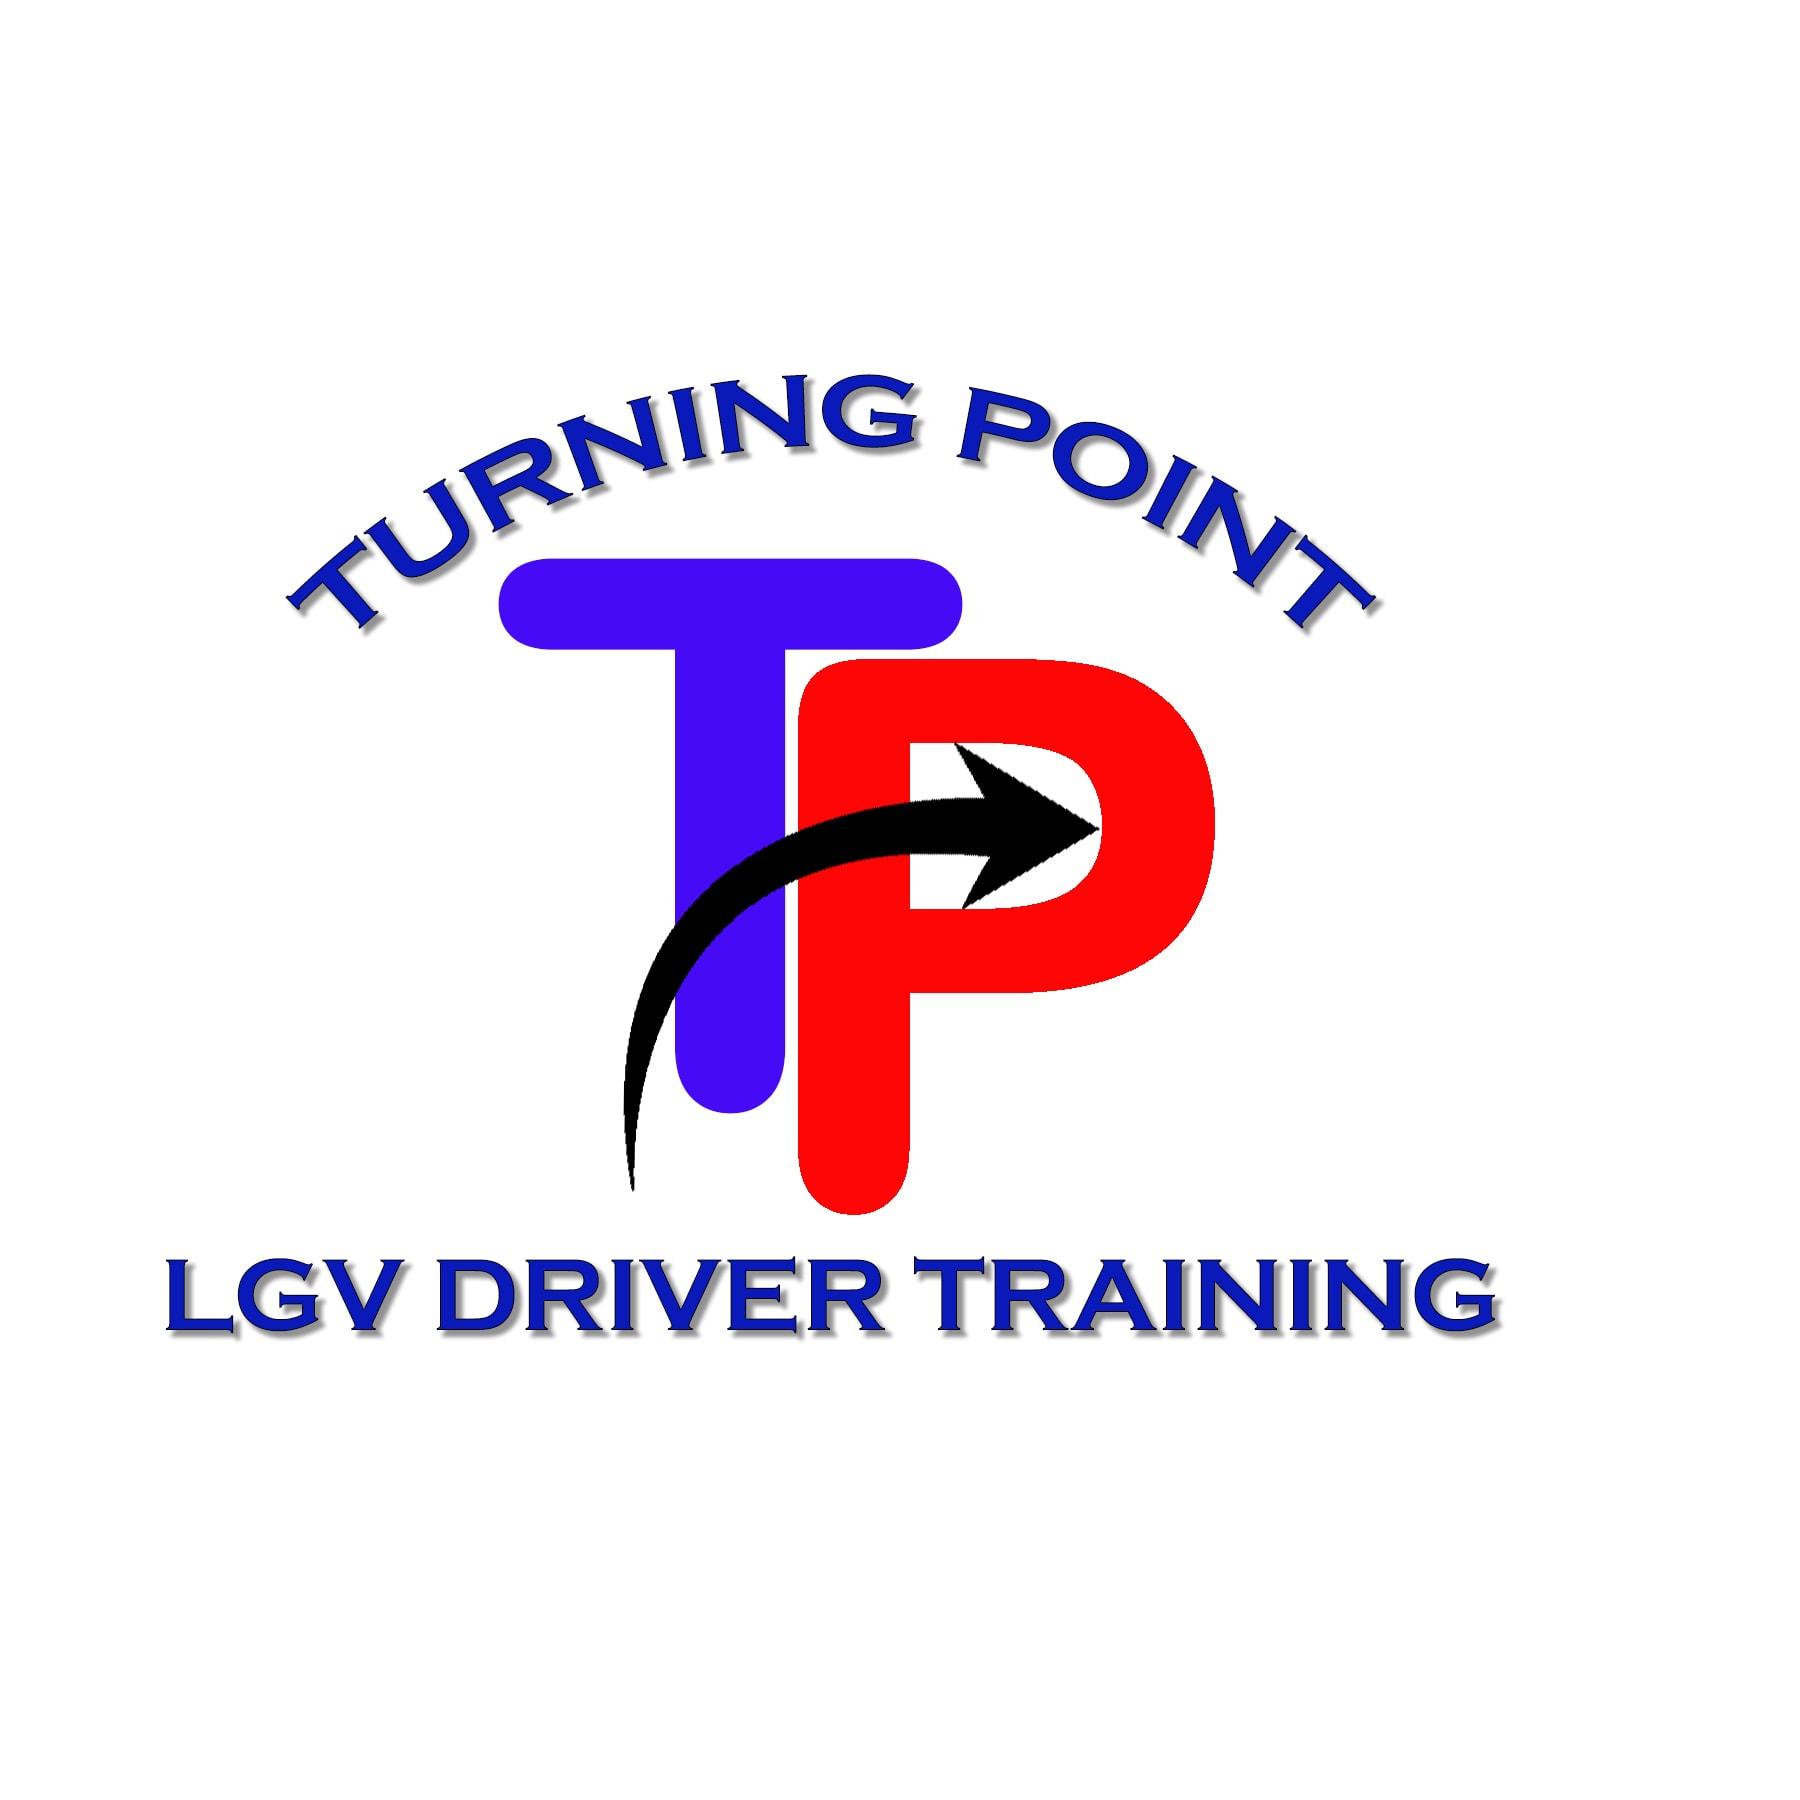 Turning Point LGV Driver Training Aberdeen 01224 874894